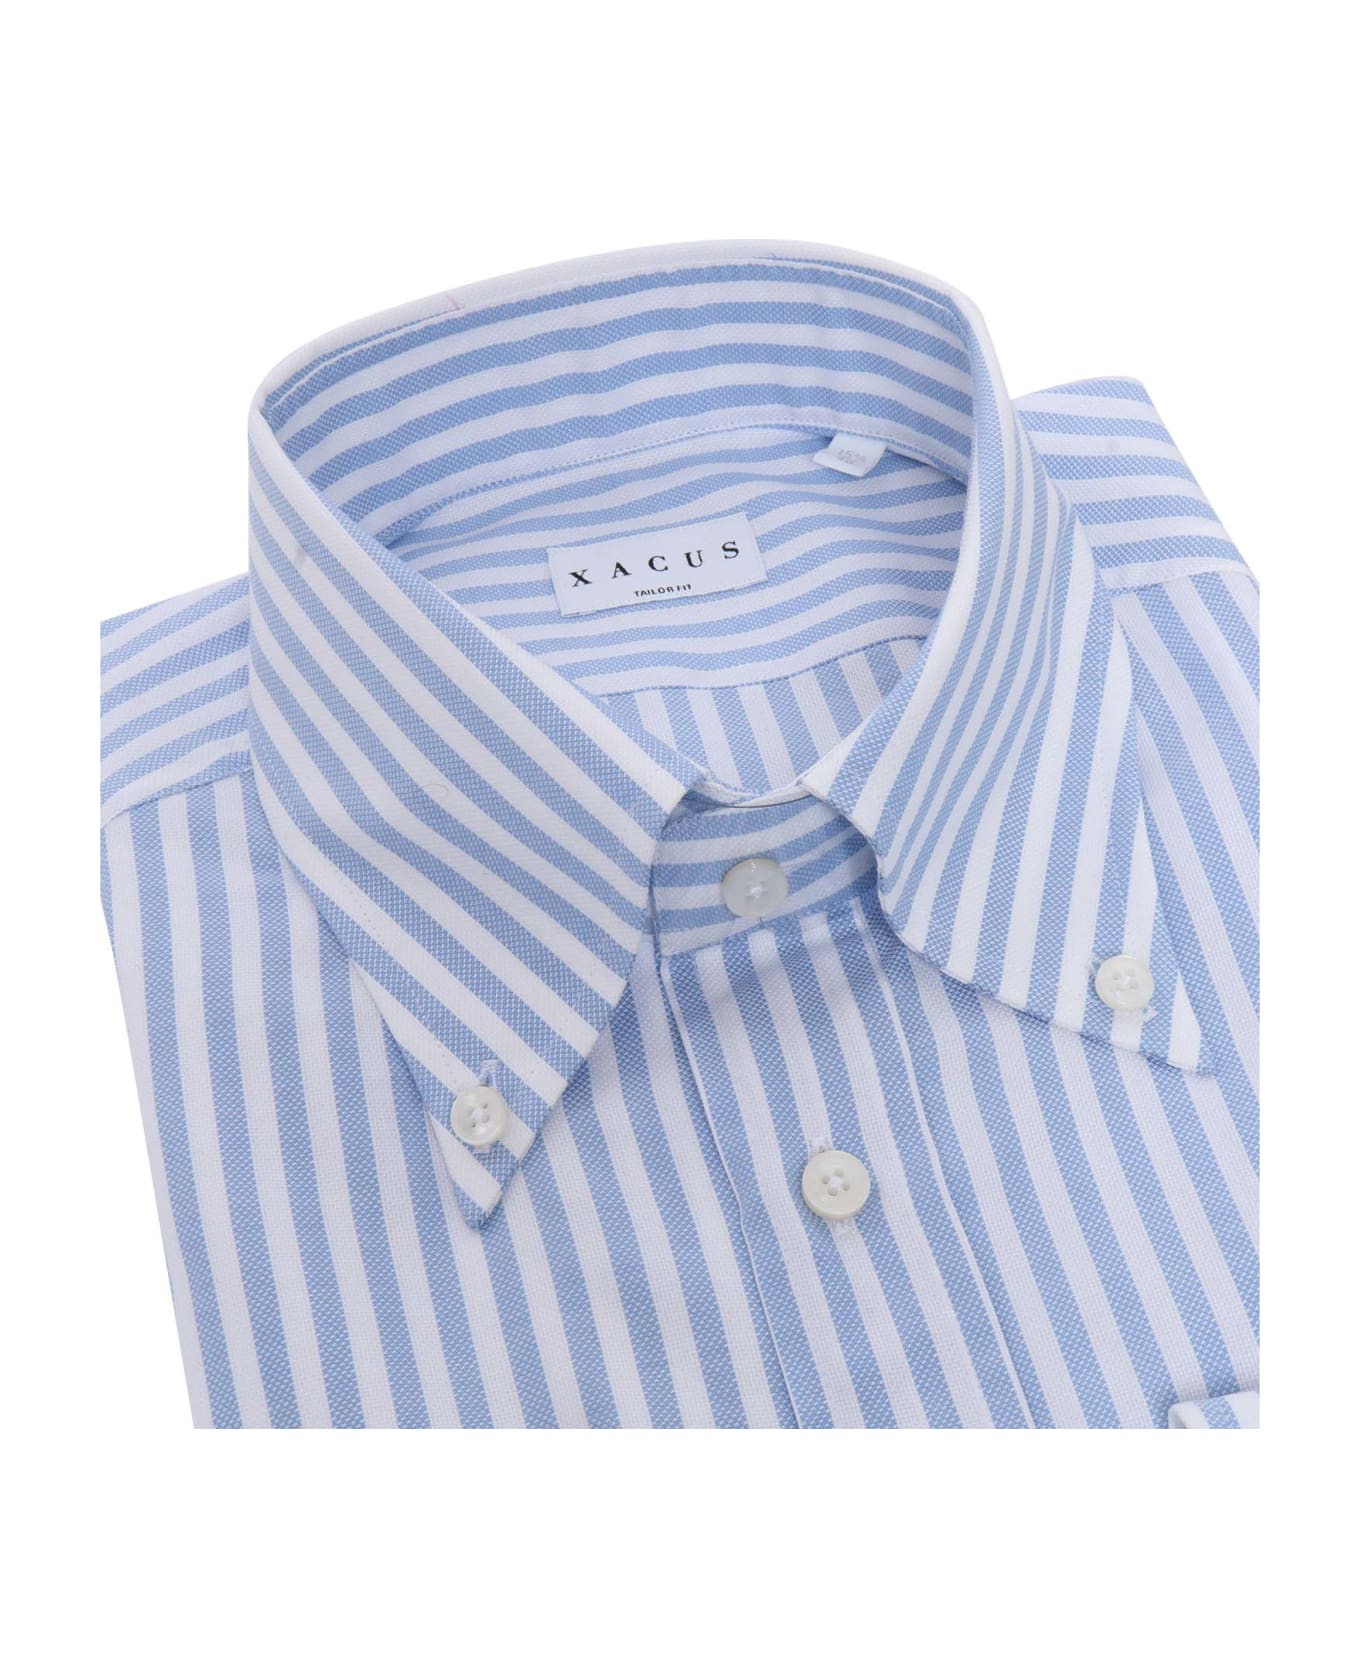 Xacus Light Blue Striped Shirt - MULTICOLOR